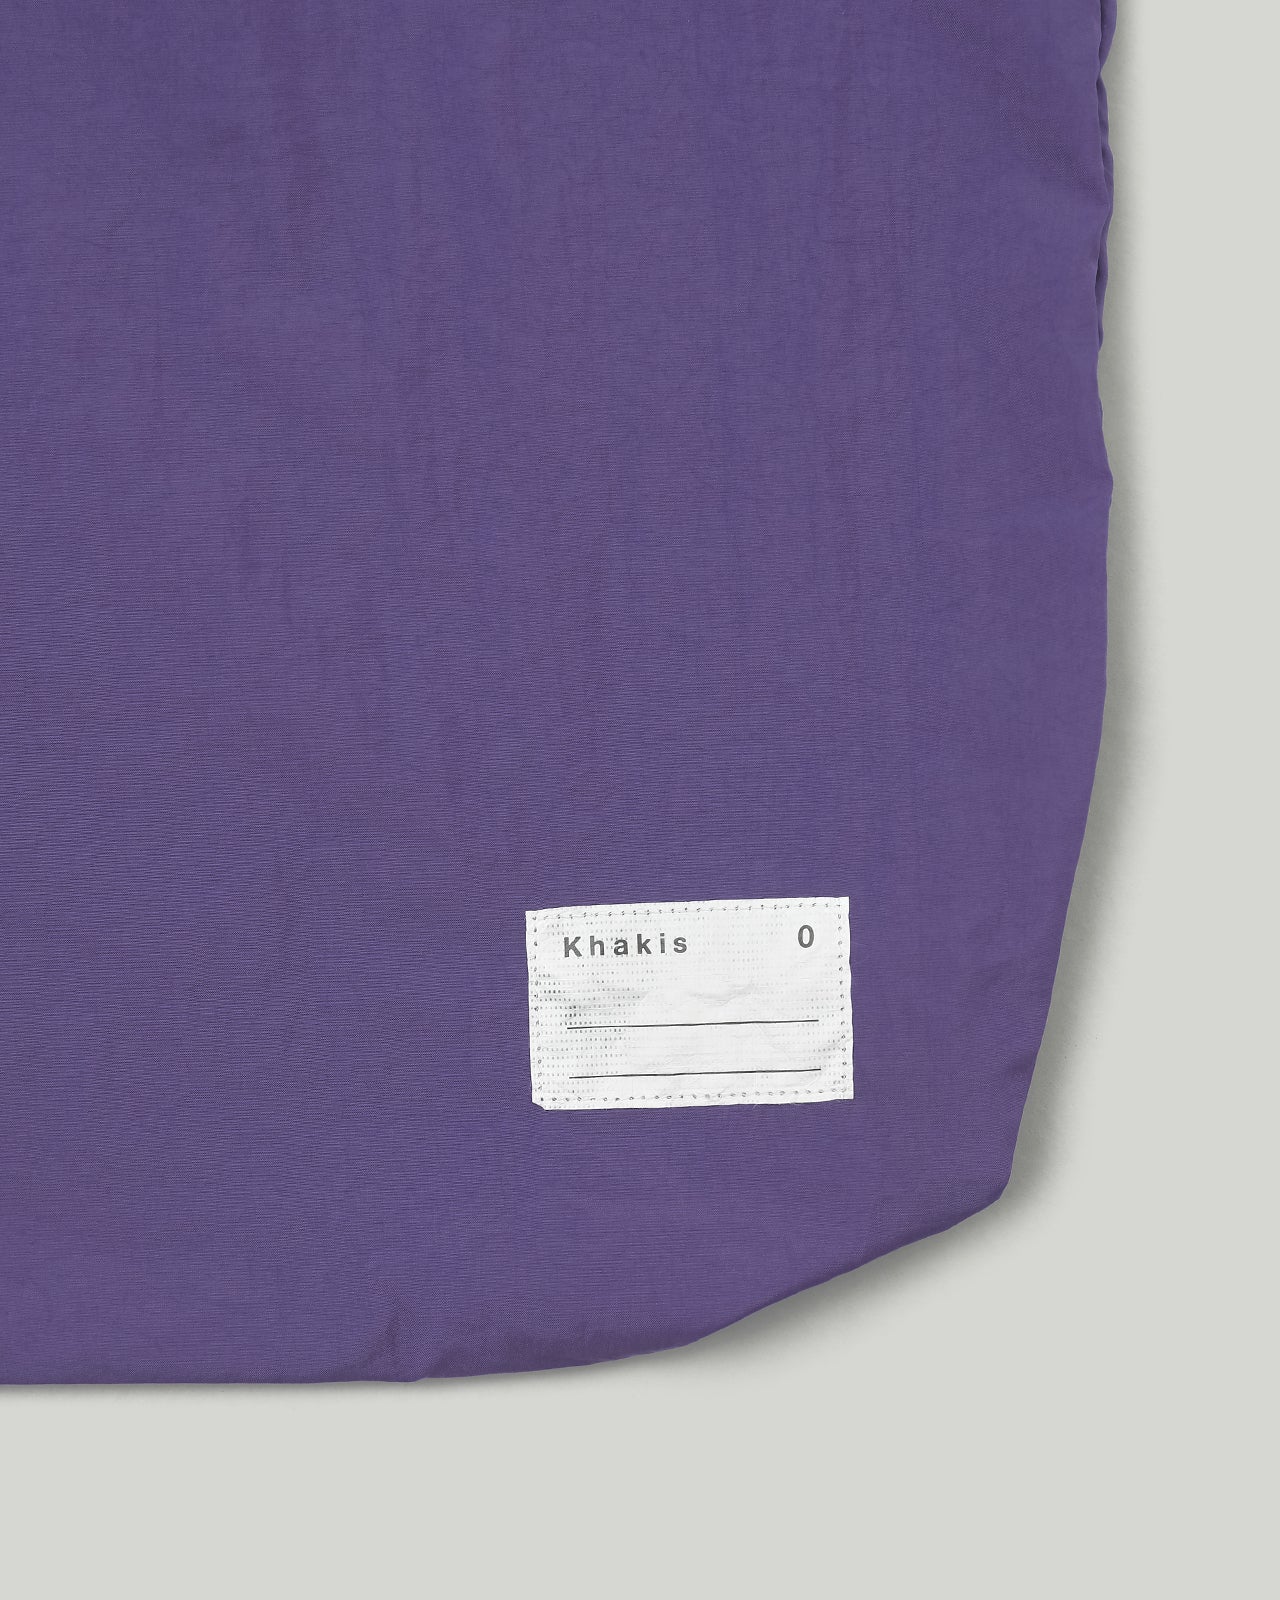 Packable Tote Purple